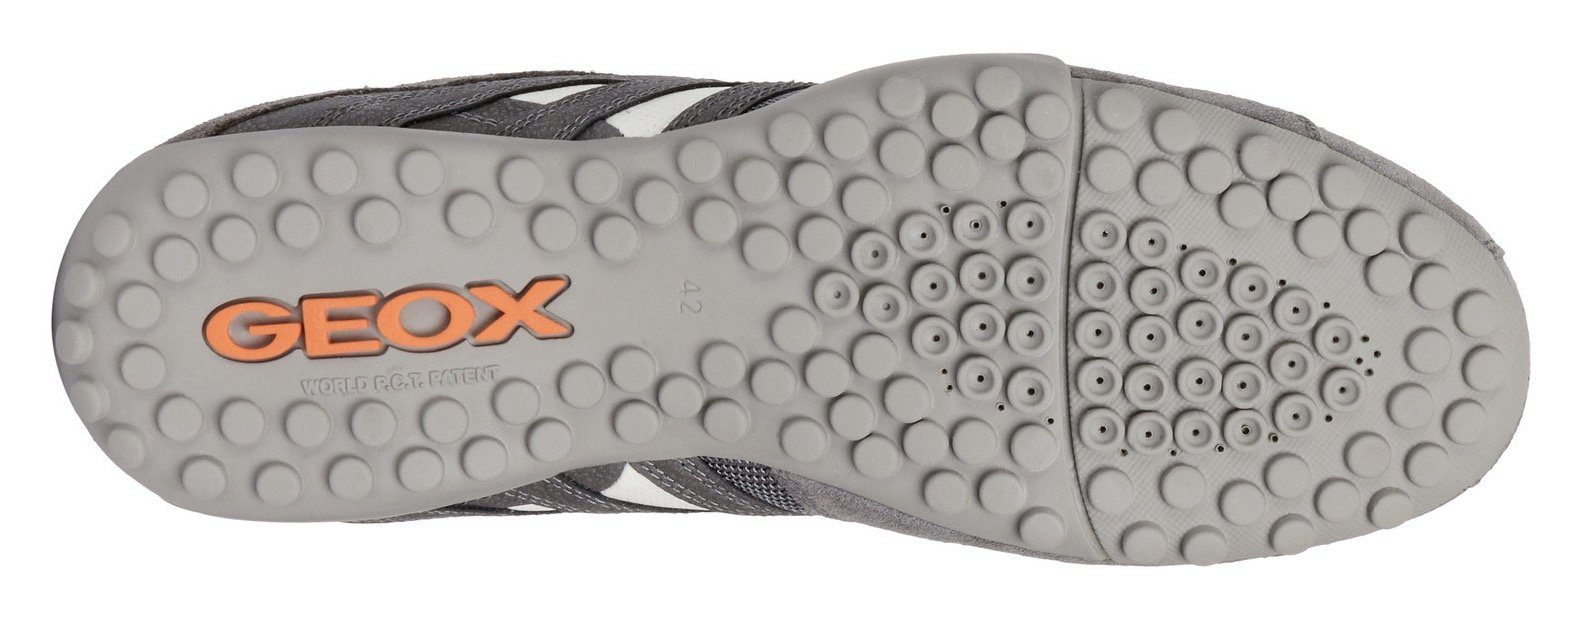 Geox Snake im Membrane Geox Materialmix mit hellgrau, Sneaker orange weiß, Spezial